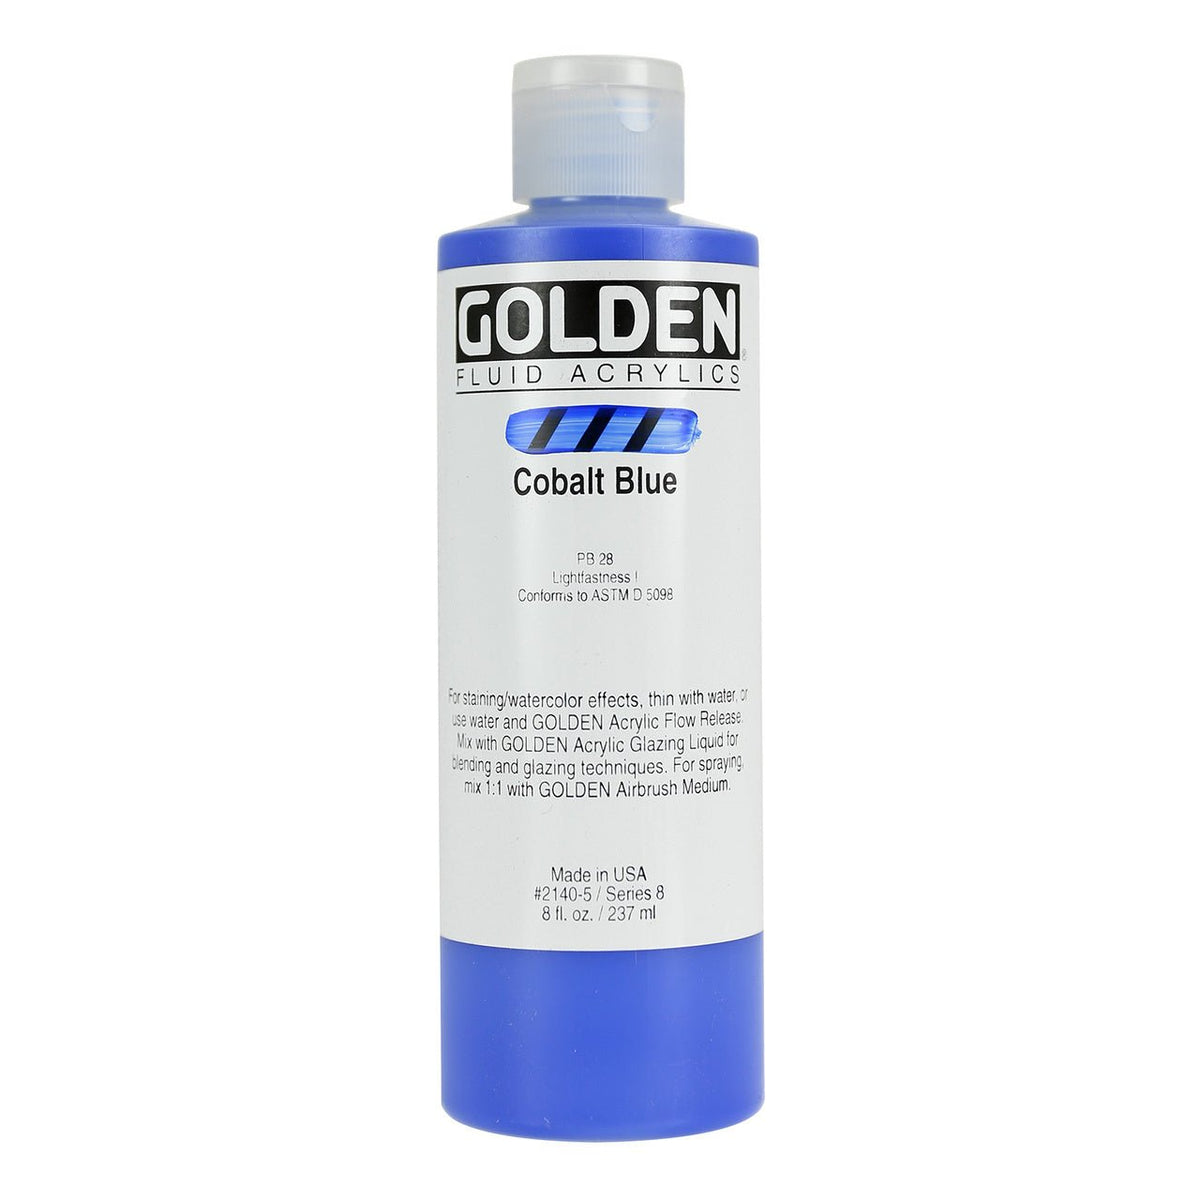 Golden Fluid Acrylic Cobalt Blue 8 oz - merriartist.com